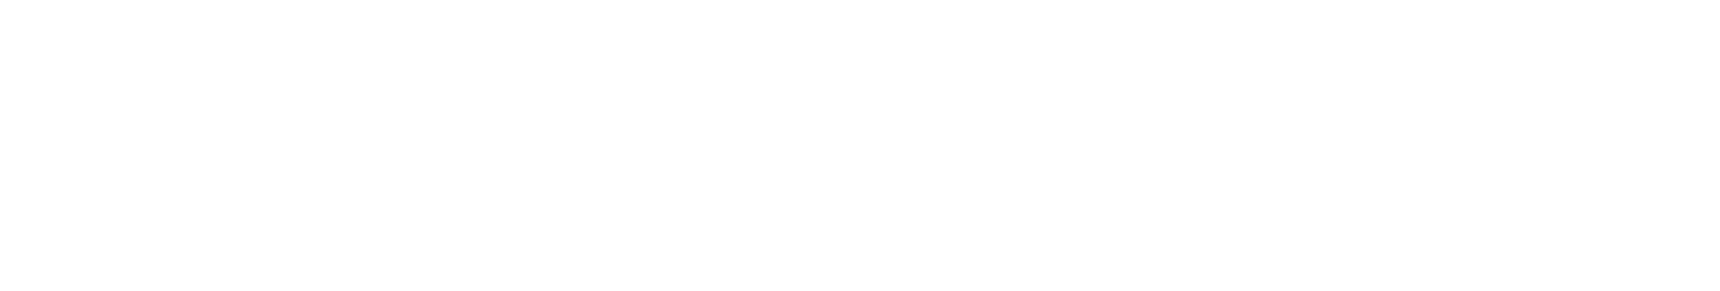 Elizabeth Yarzagaray, Rubelino Tromp, Arcadio Rosina, Tirhakah Richardson, Aschtonne Richardson, Anouschka Richardson   